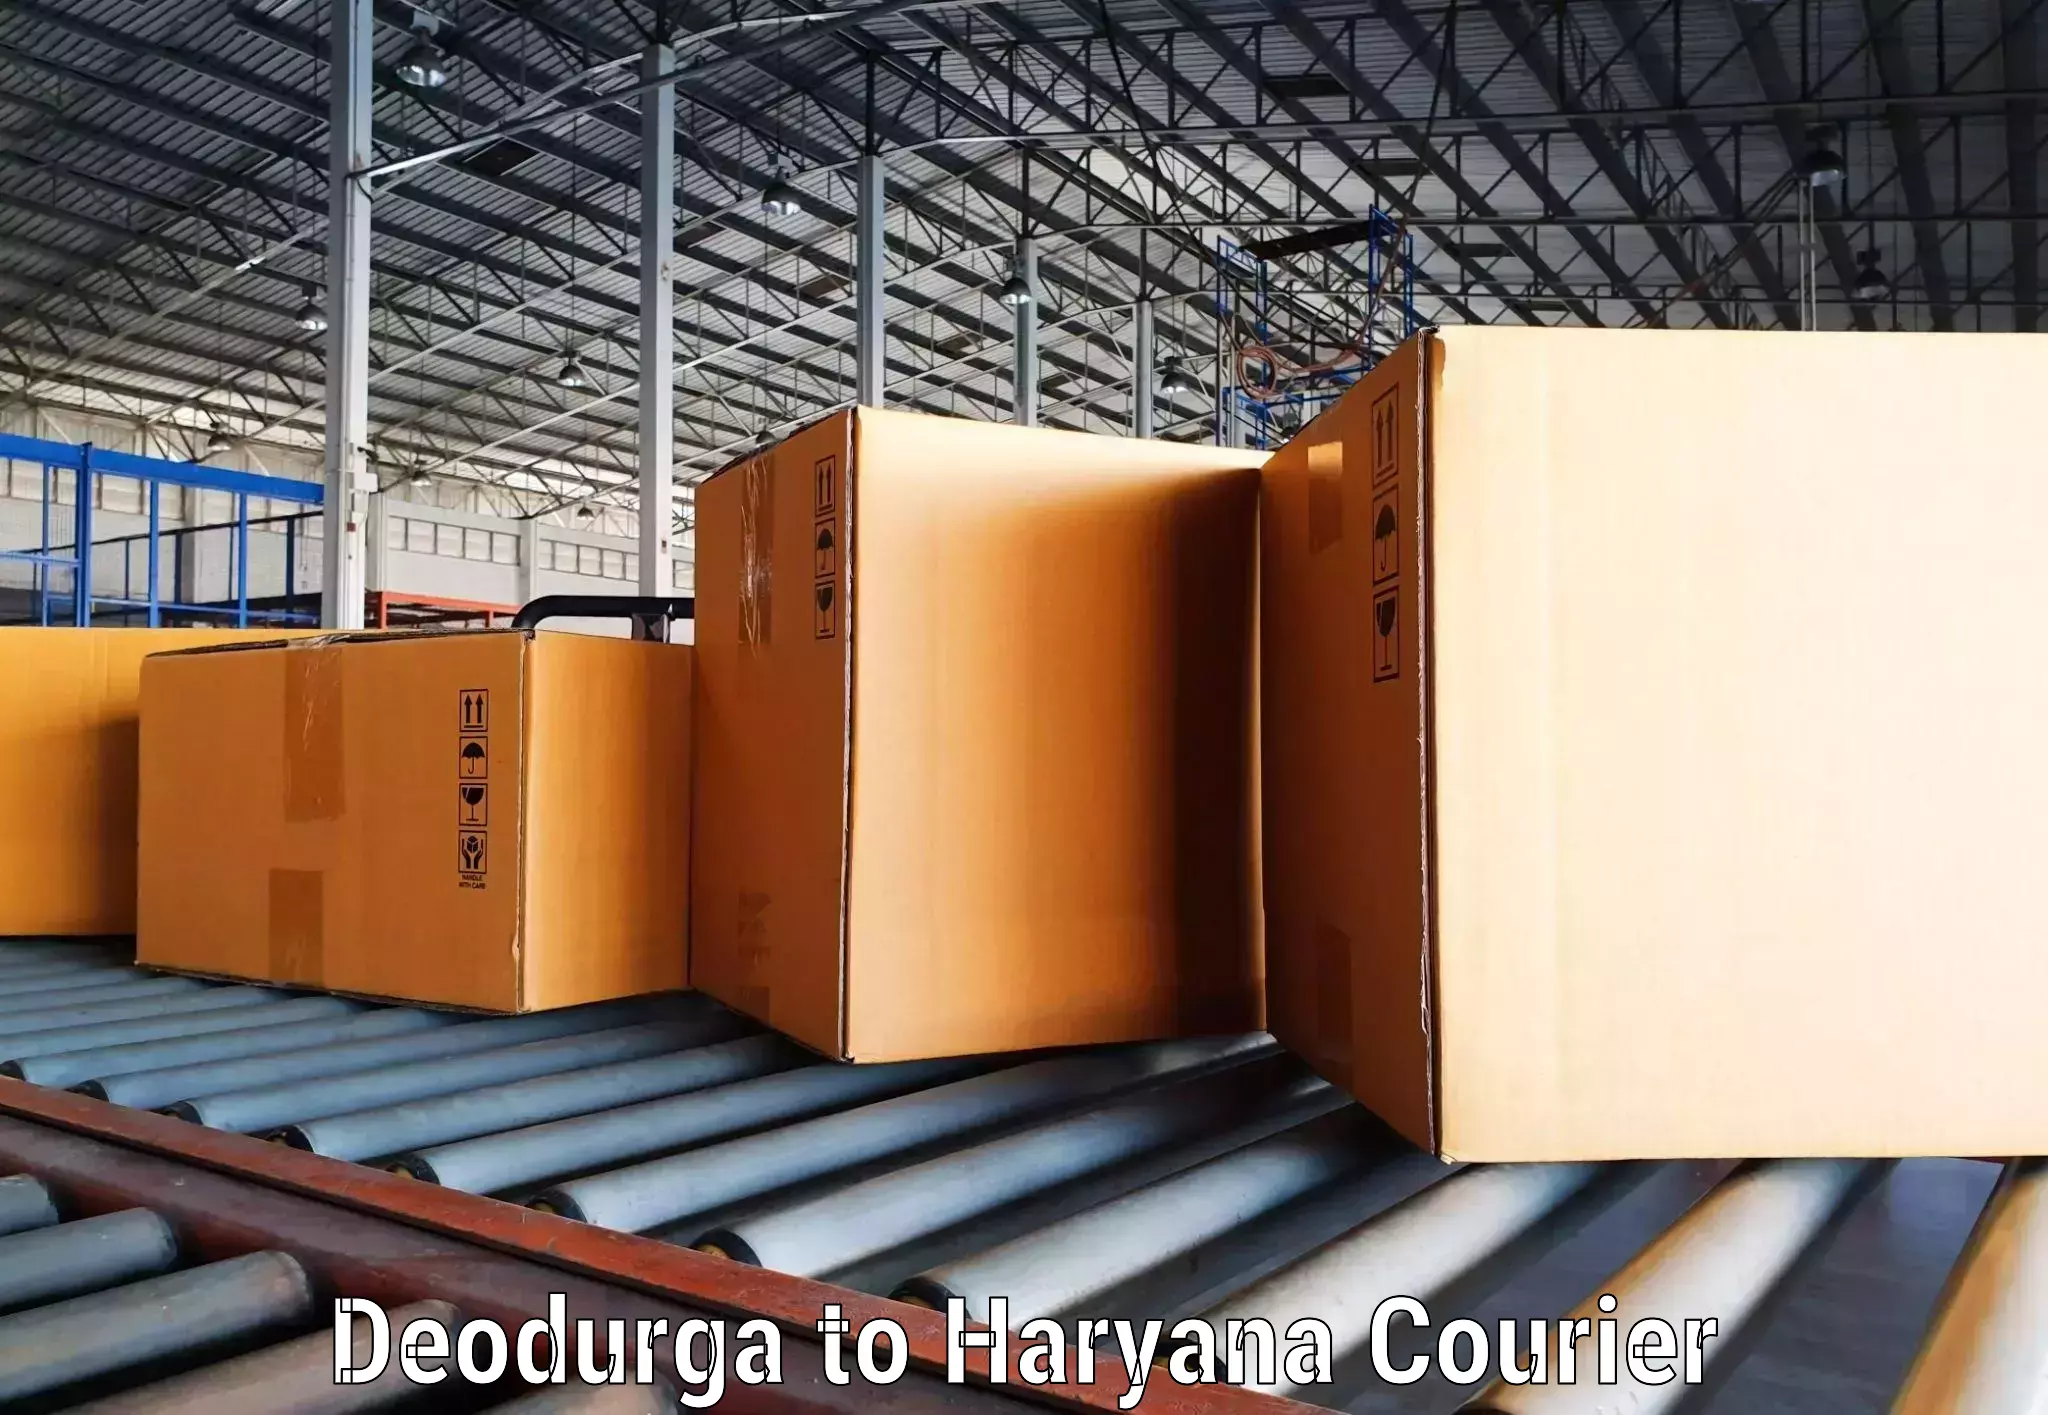 International courier networks Deodurga to NCR Haryana